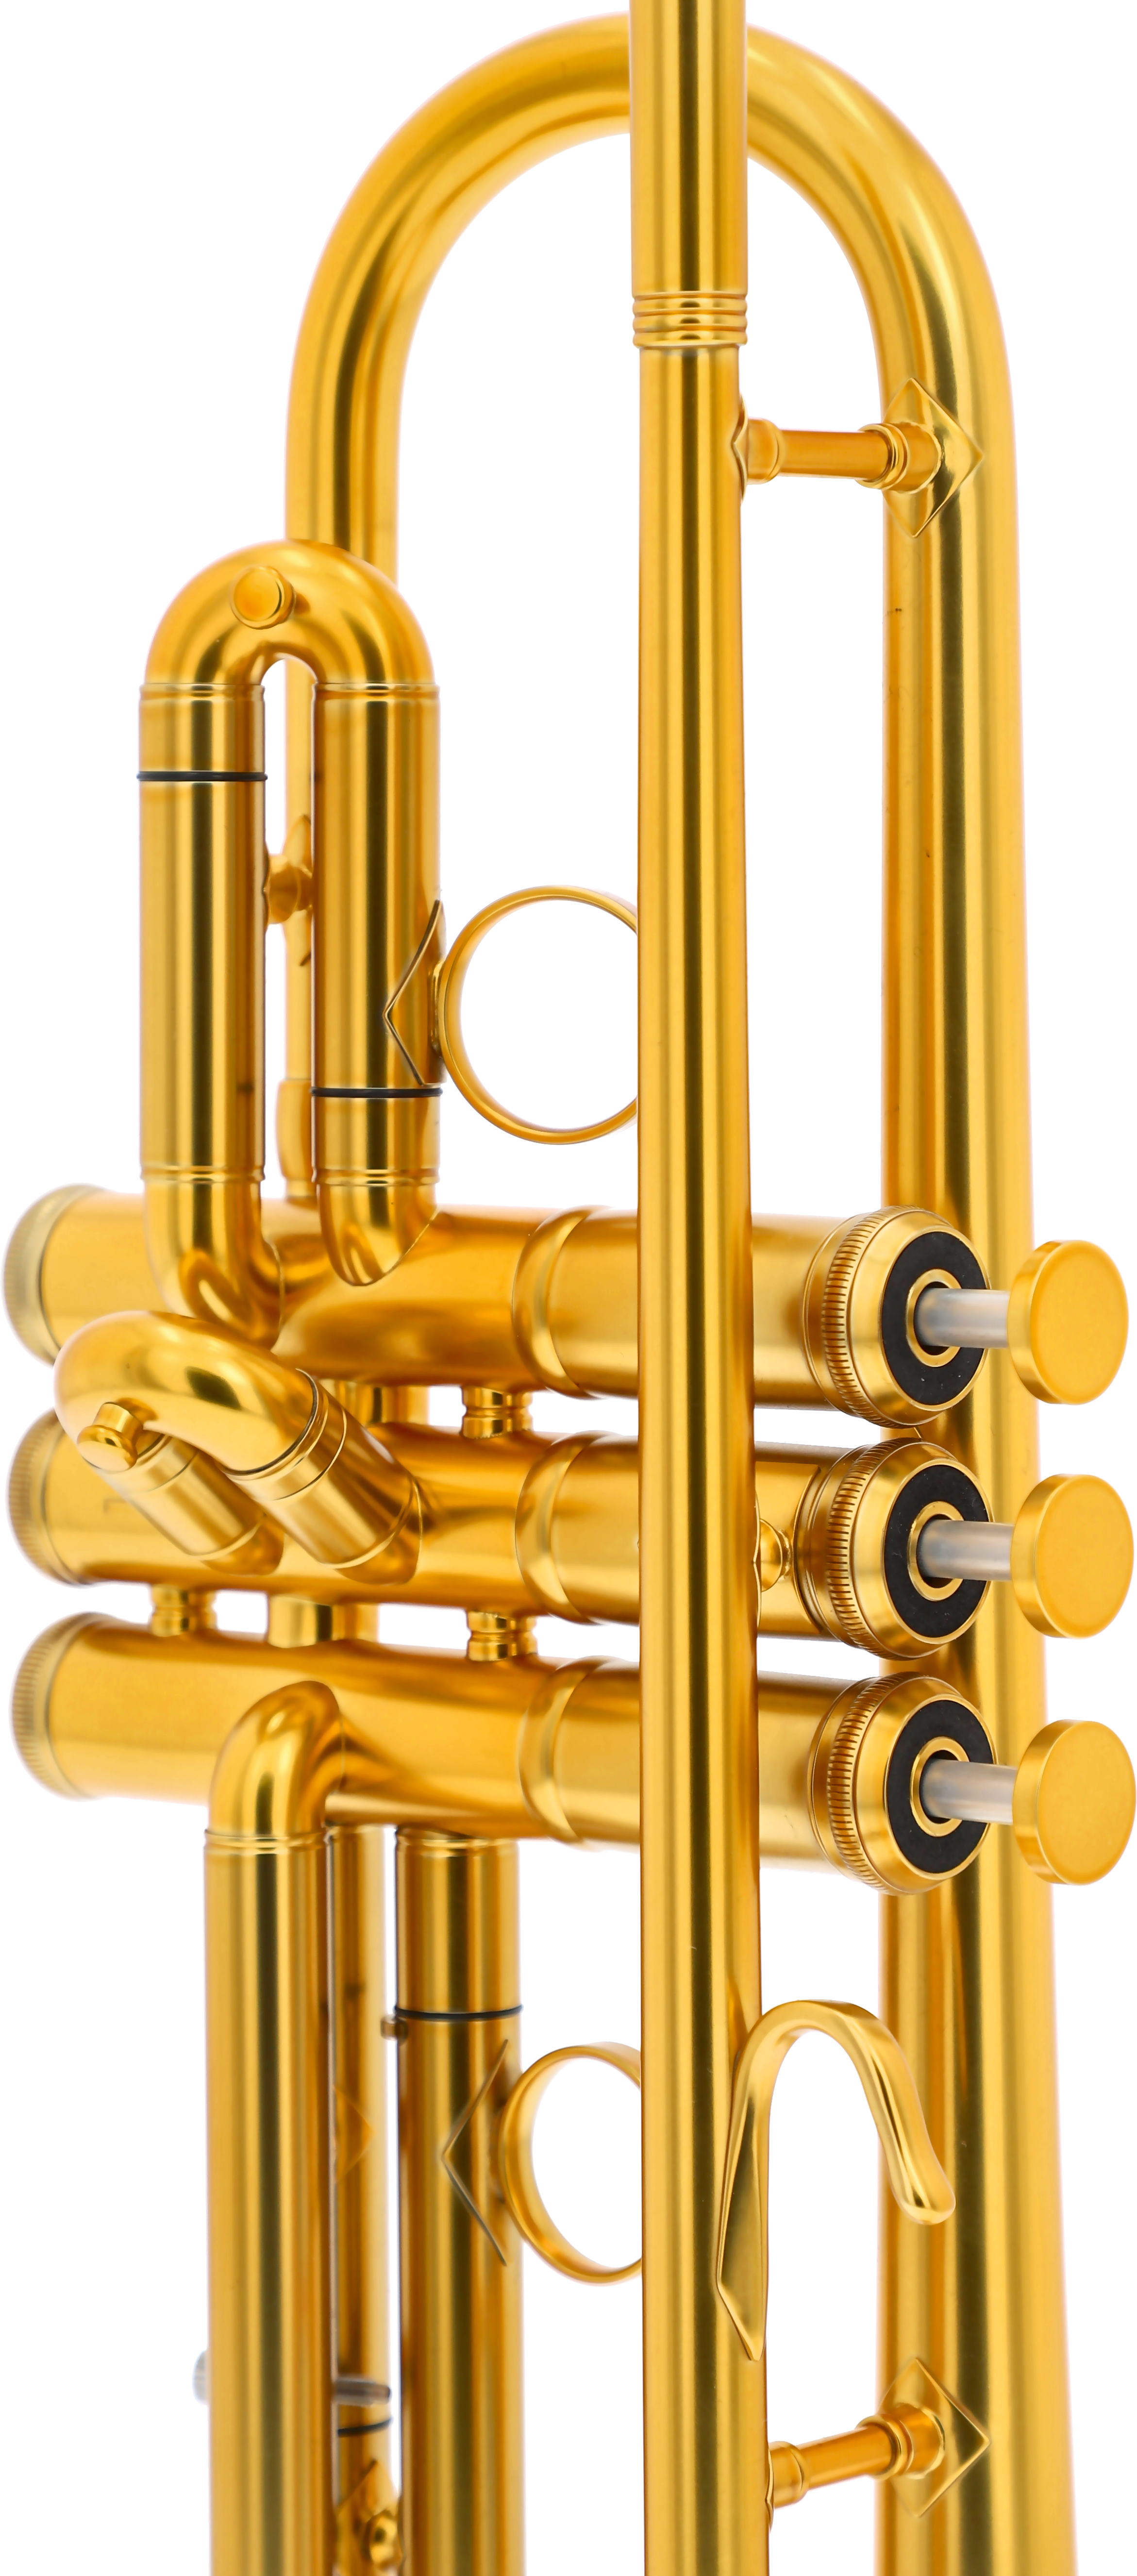 B Trompete B&S Benny Brown SP88-8M-OD